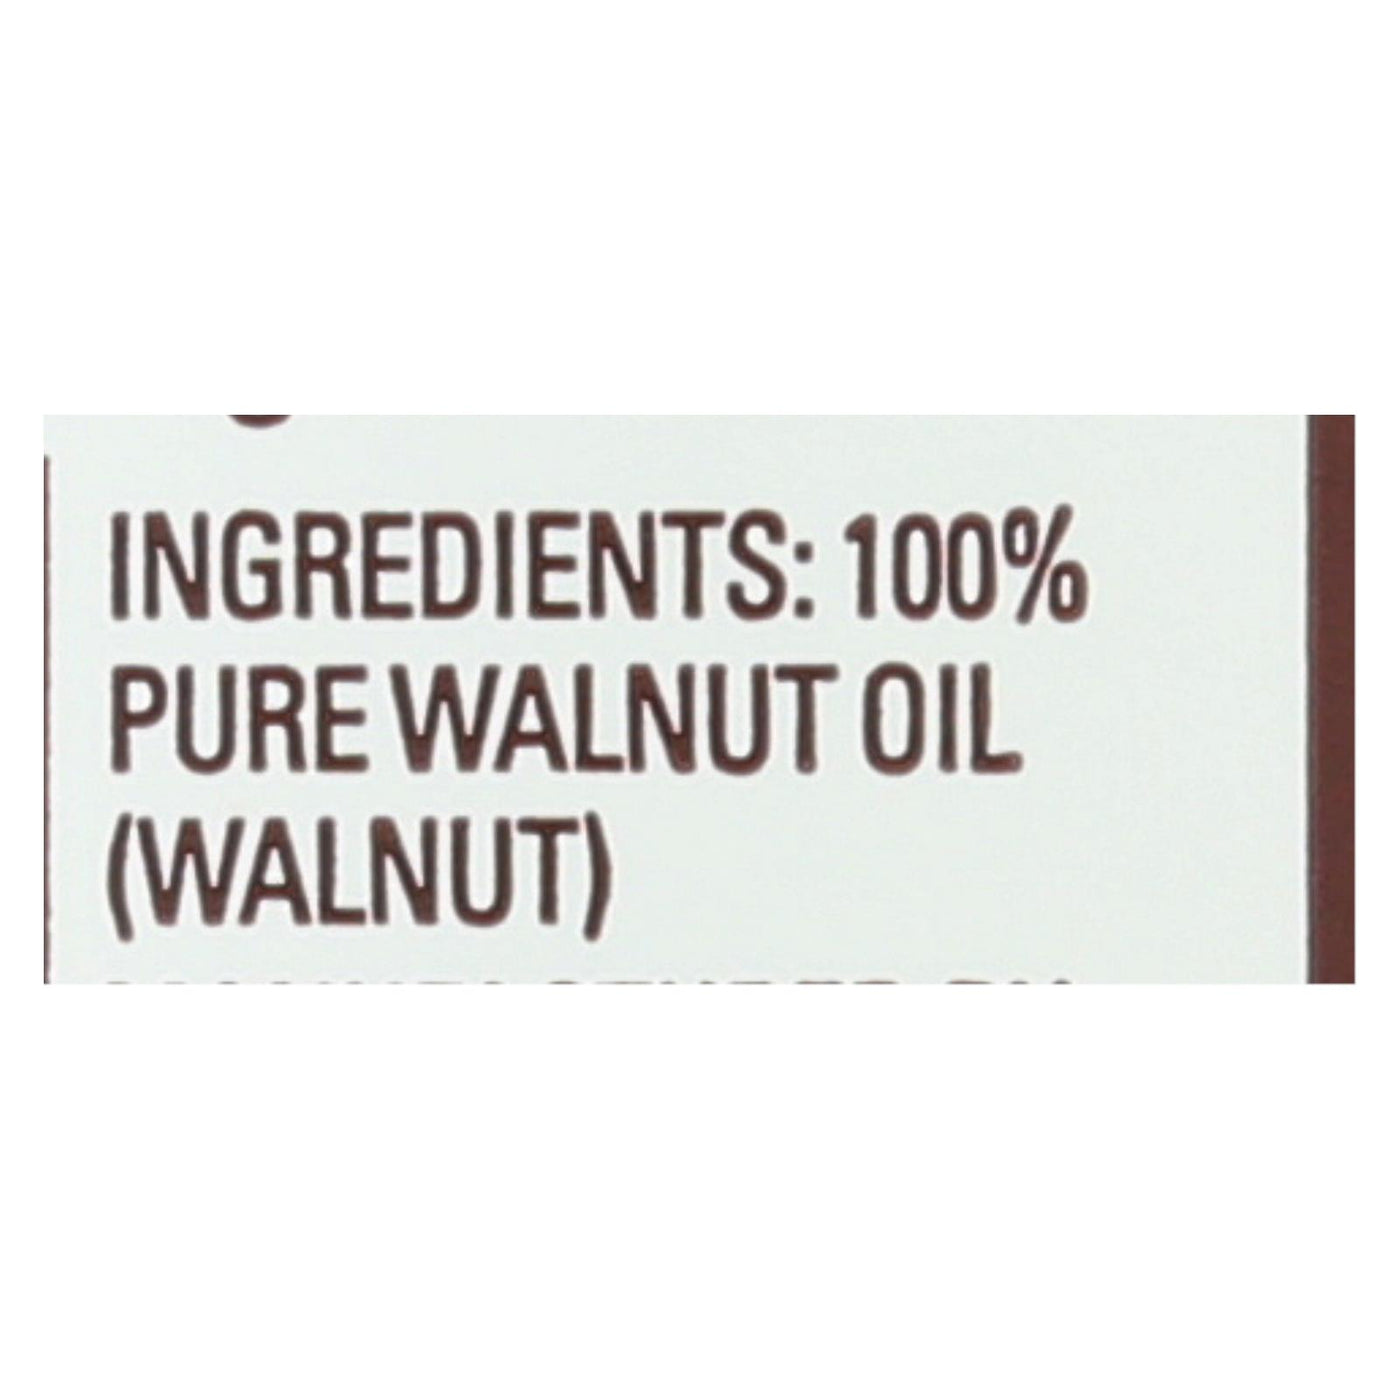 La Tourangelle Roasted Walnut Oil - Case Of 6 - 500 Ml | OnlyNaturals.us